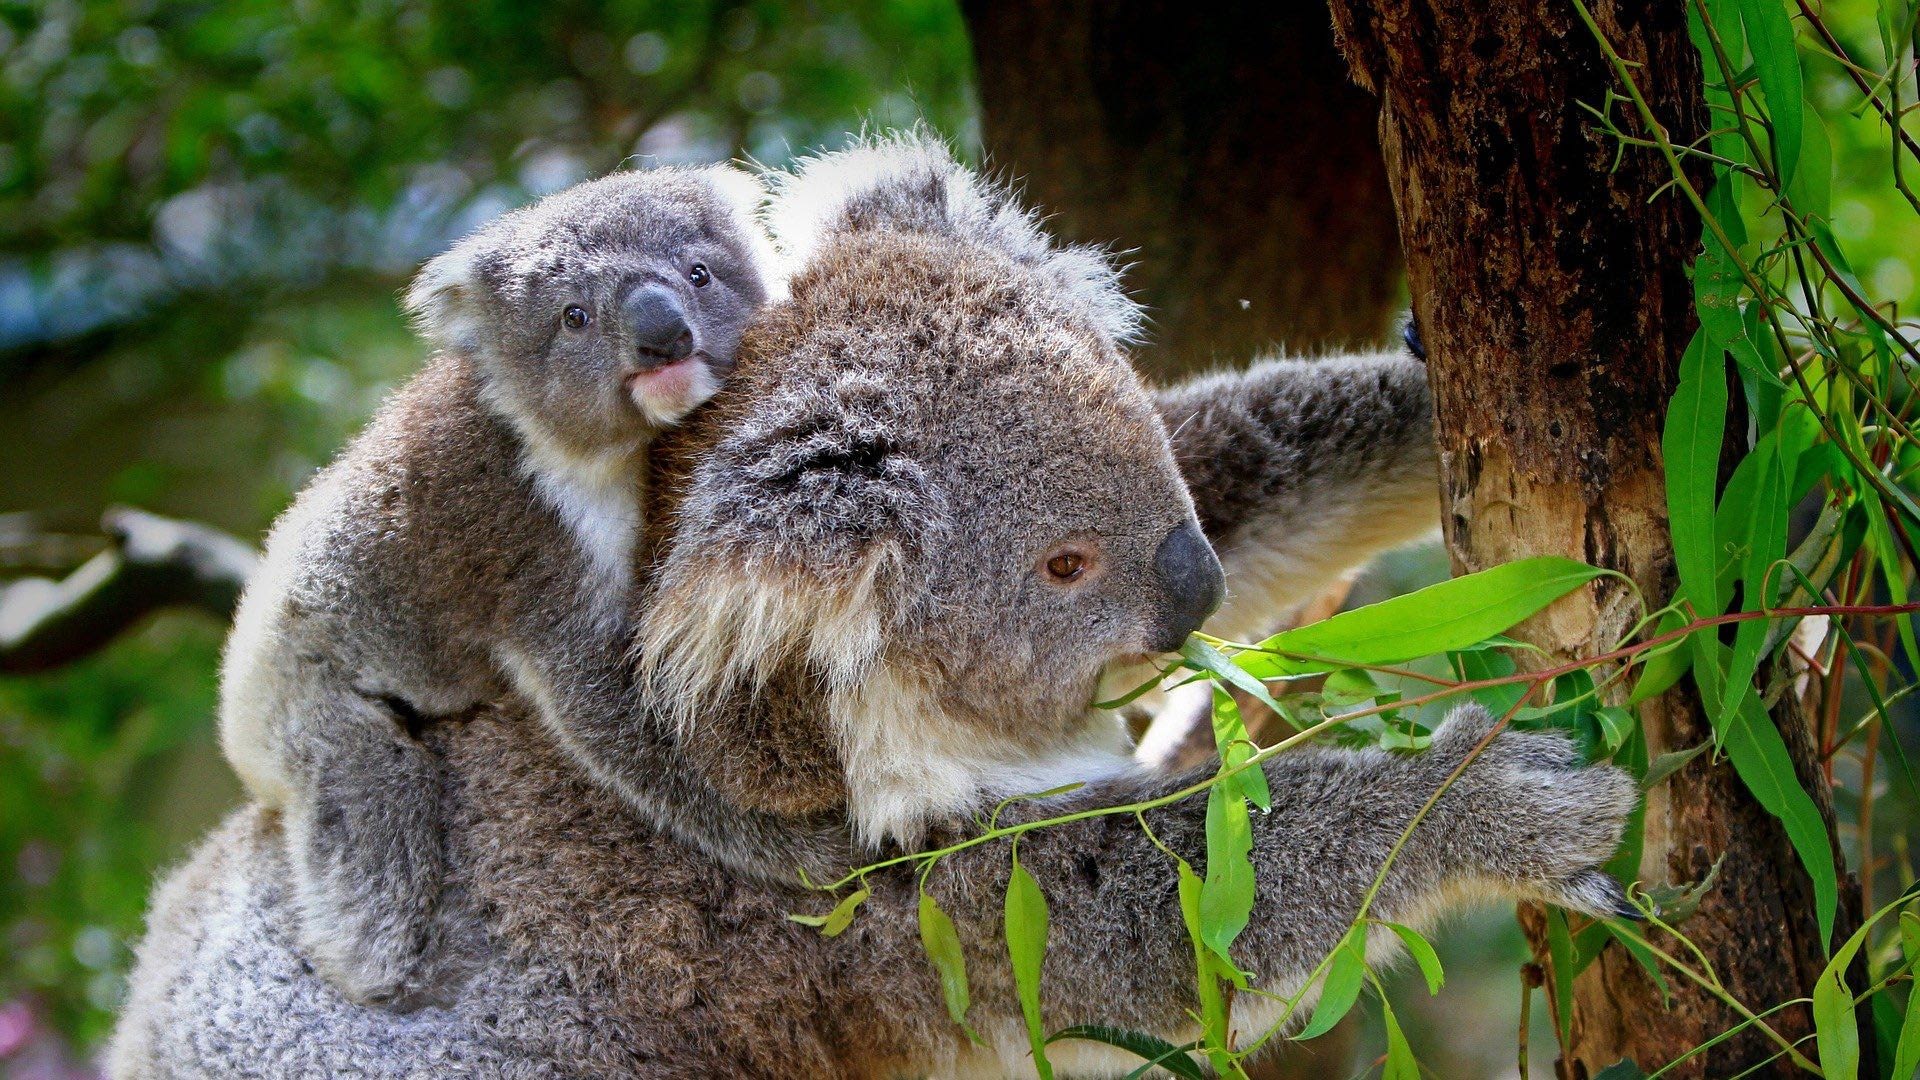 Image: Mother and baby koala climbing a tree